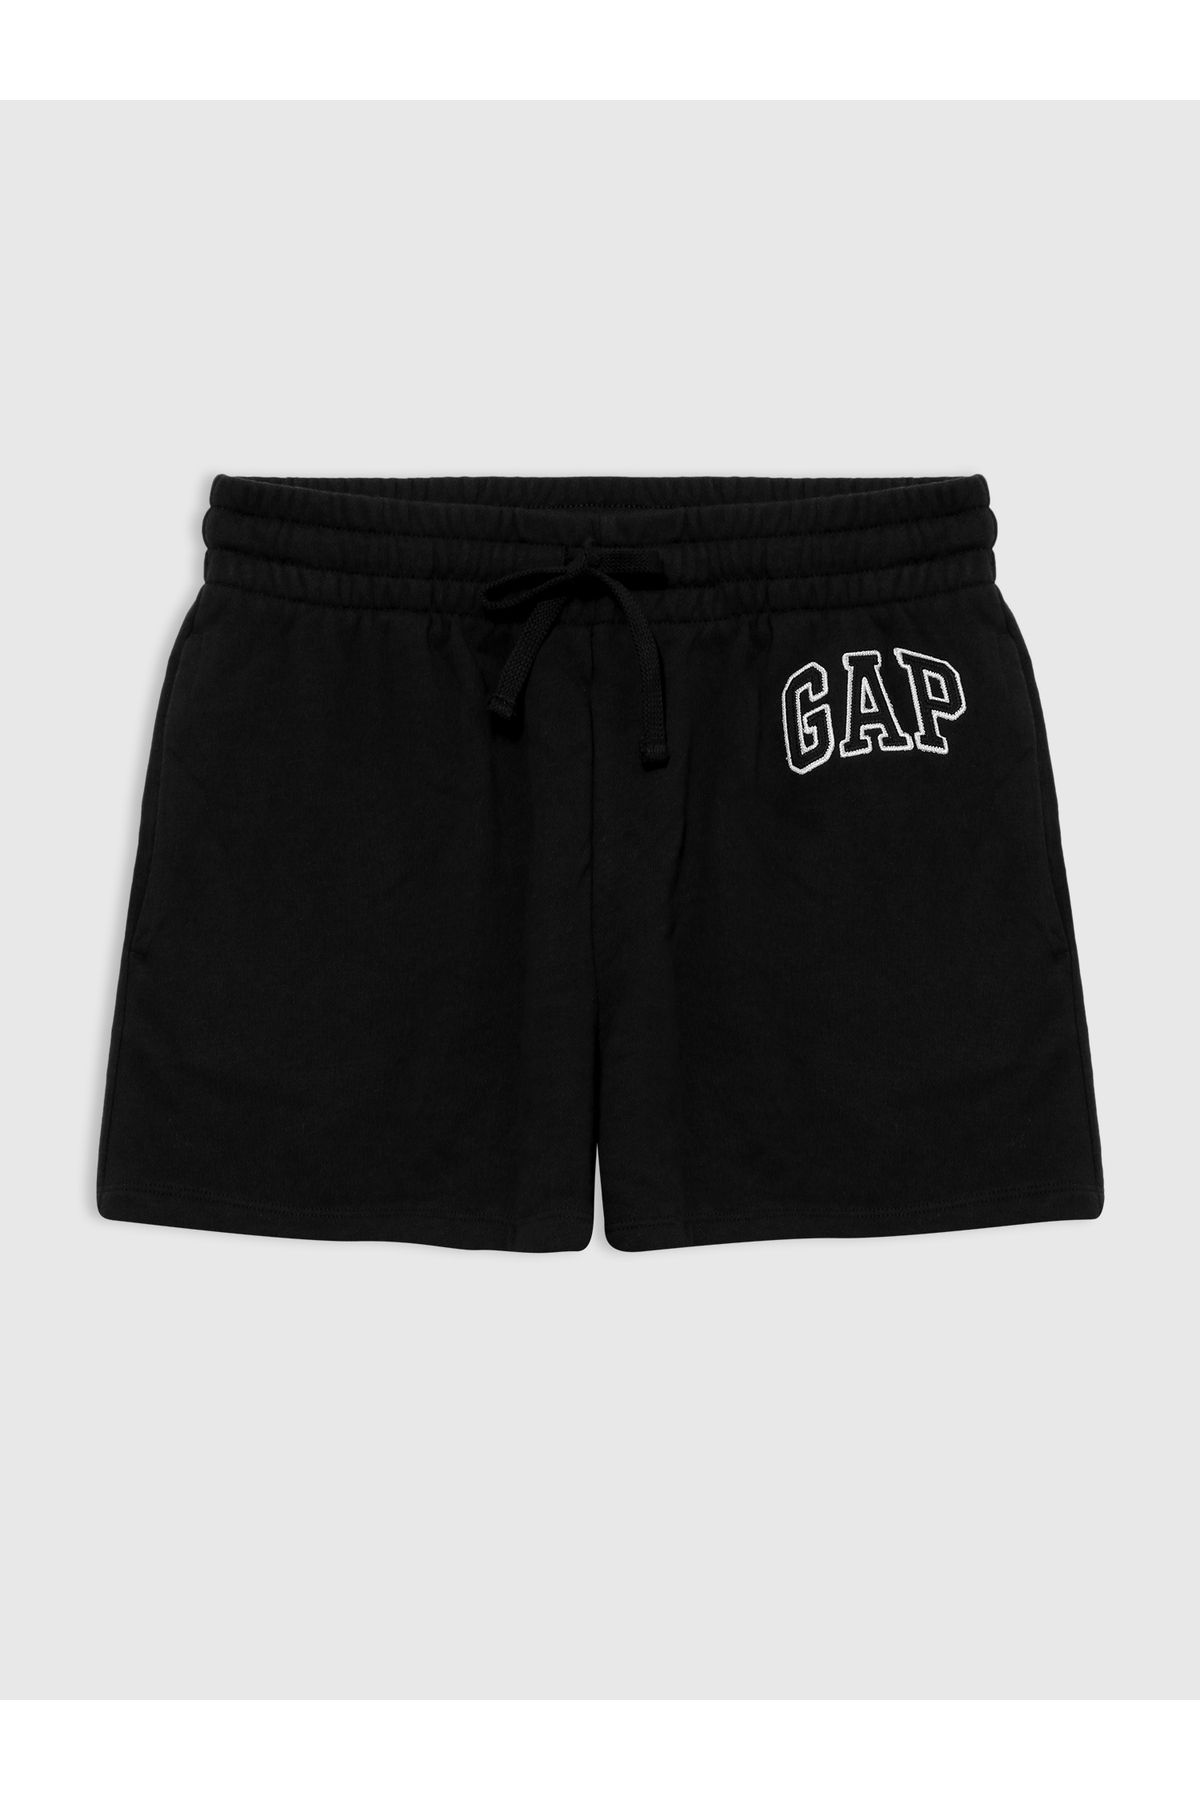 GAP Kadın Siyah Gap Logo Fransız Havlu Kumaş Şort